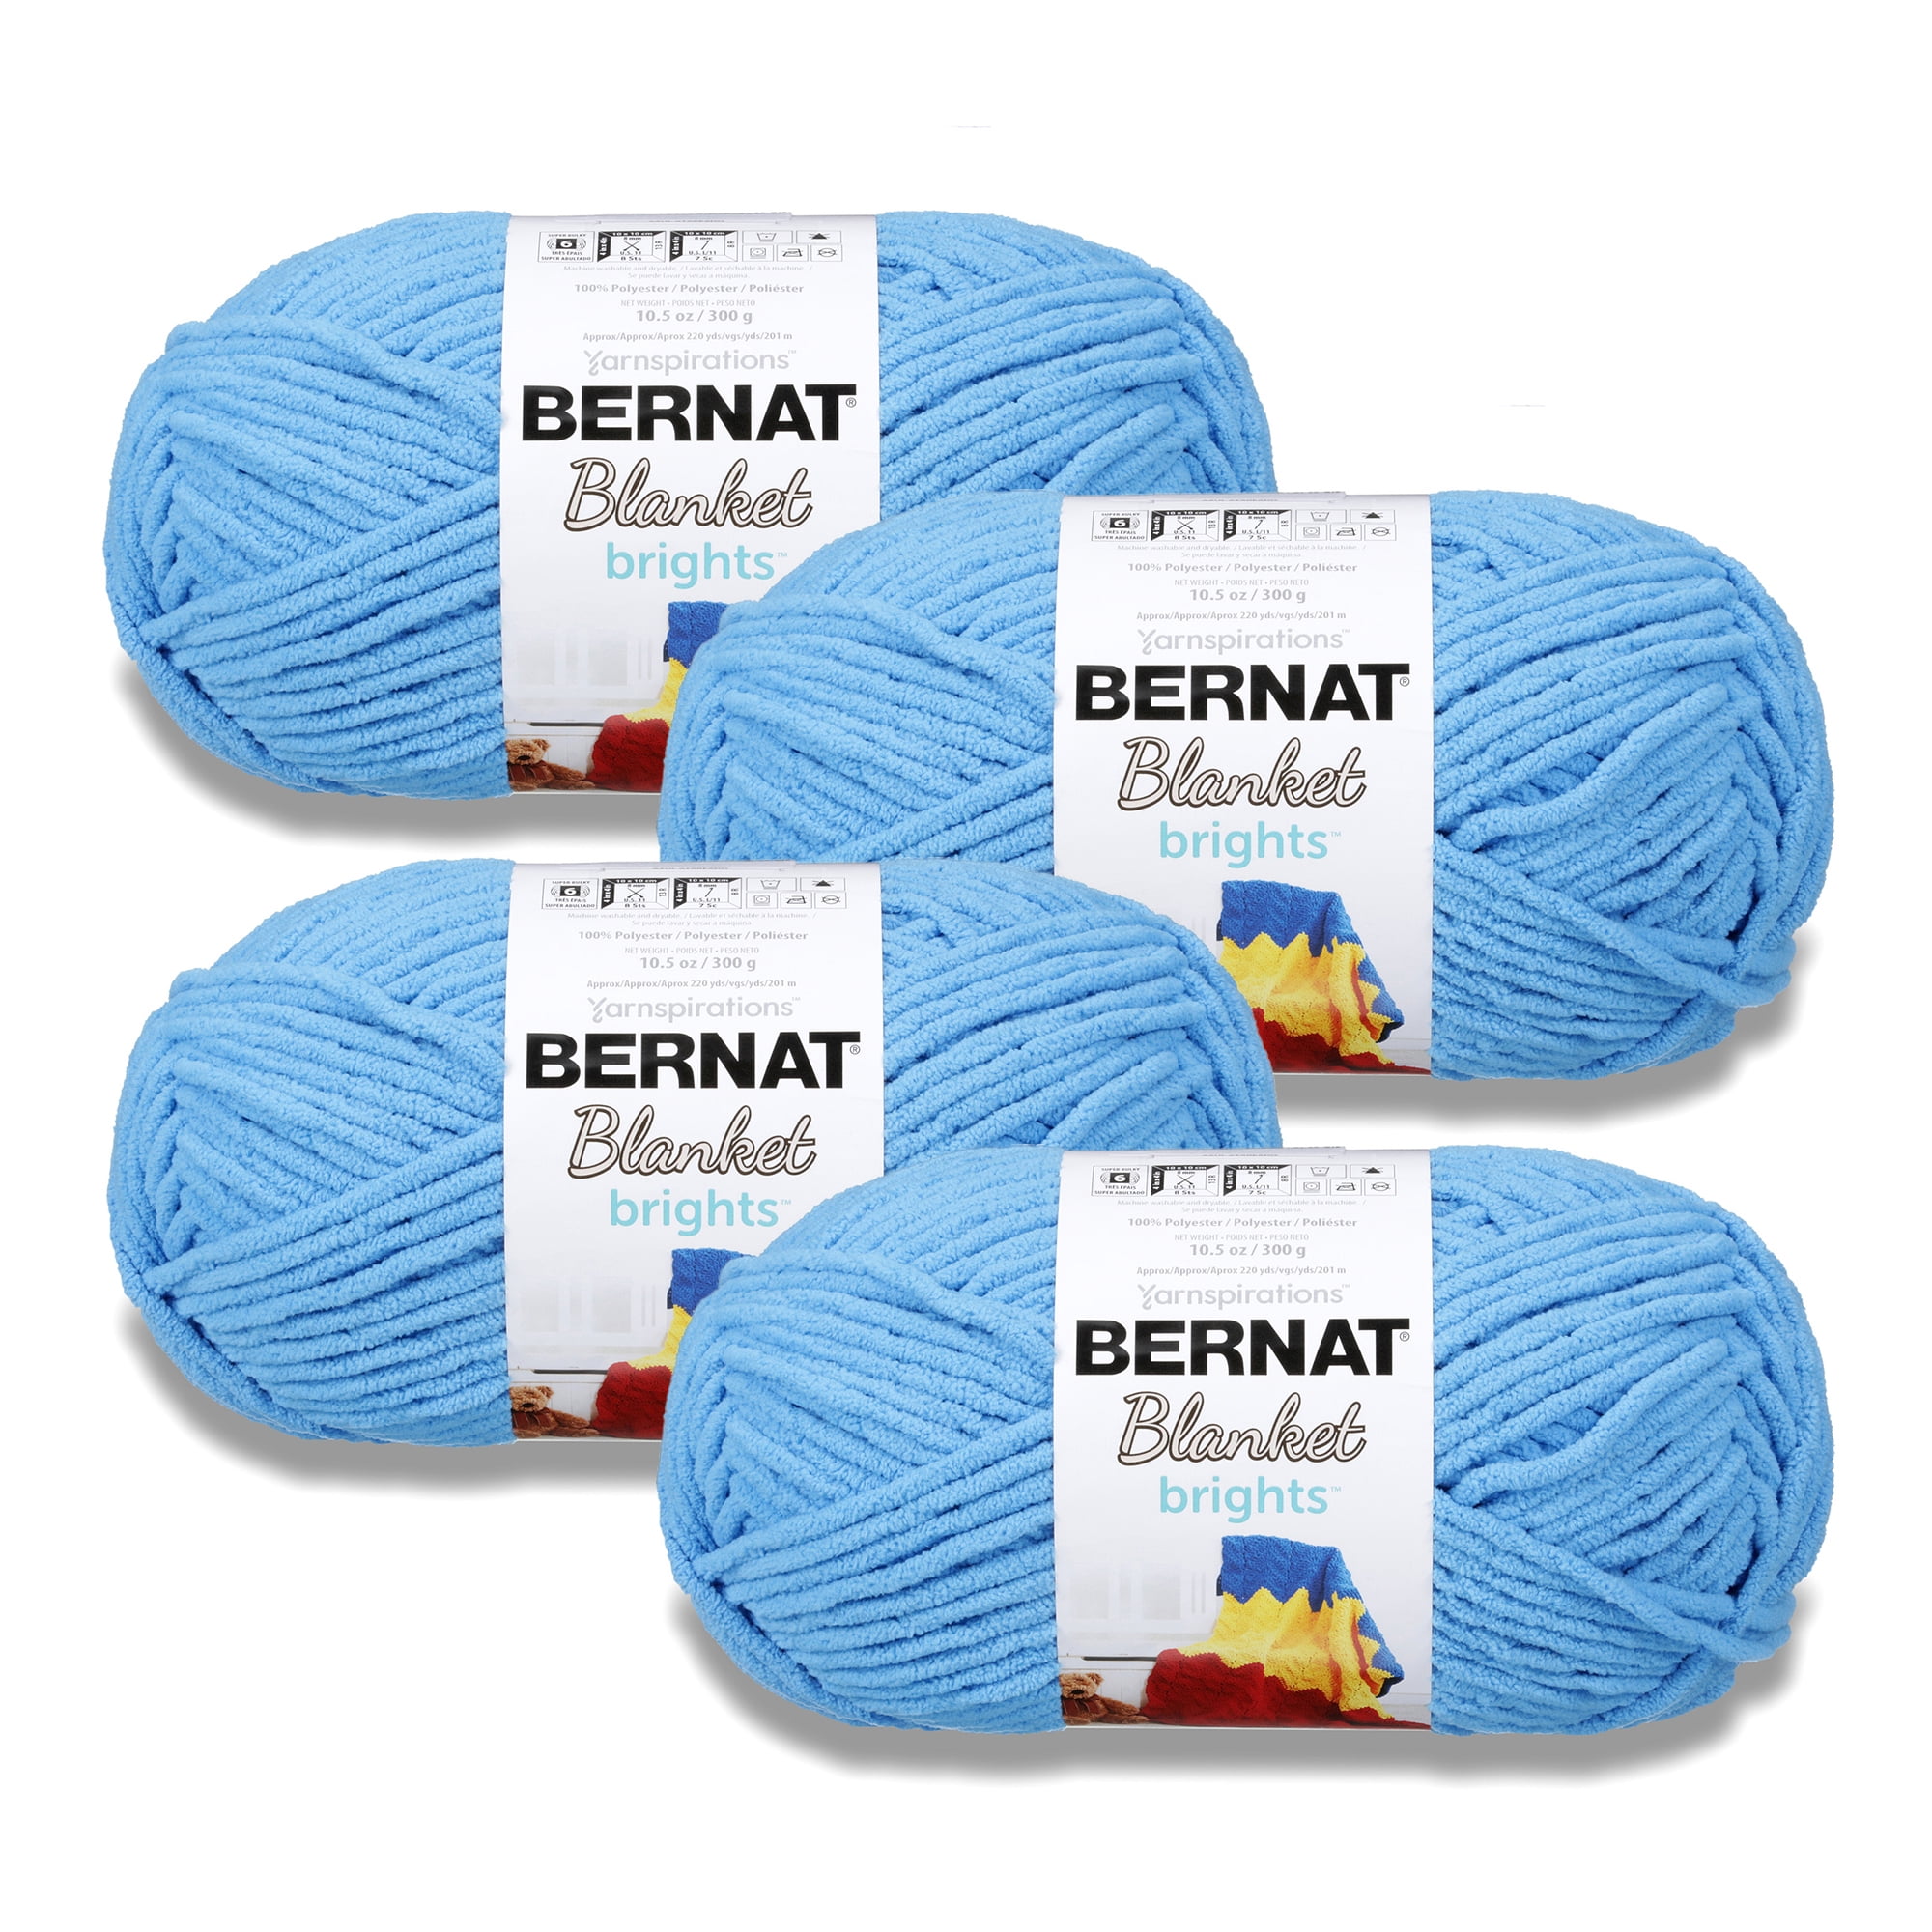 Bernat Blanket Brights #6 Super Bulky Polyester Yarn, Busy Blue 10.5oz/300g, 220 Yards (4 Pack)